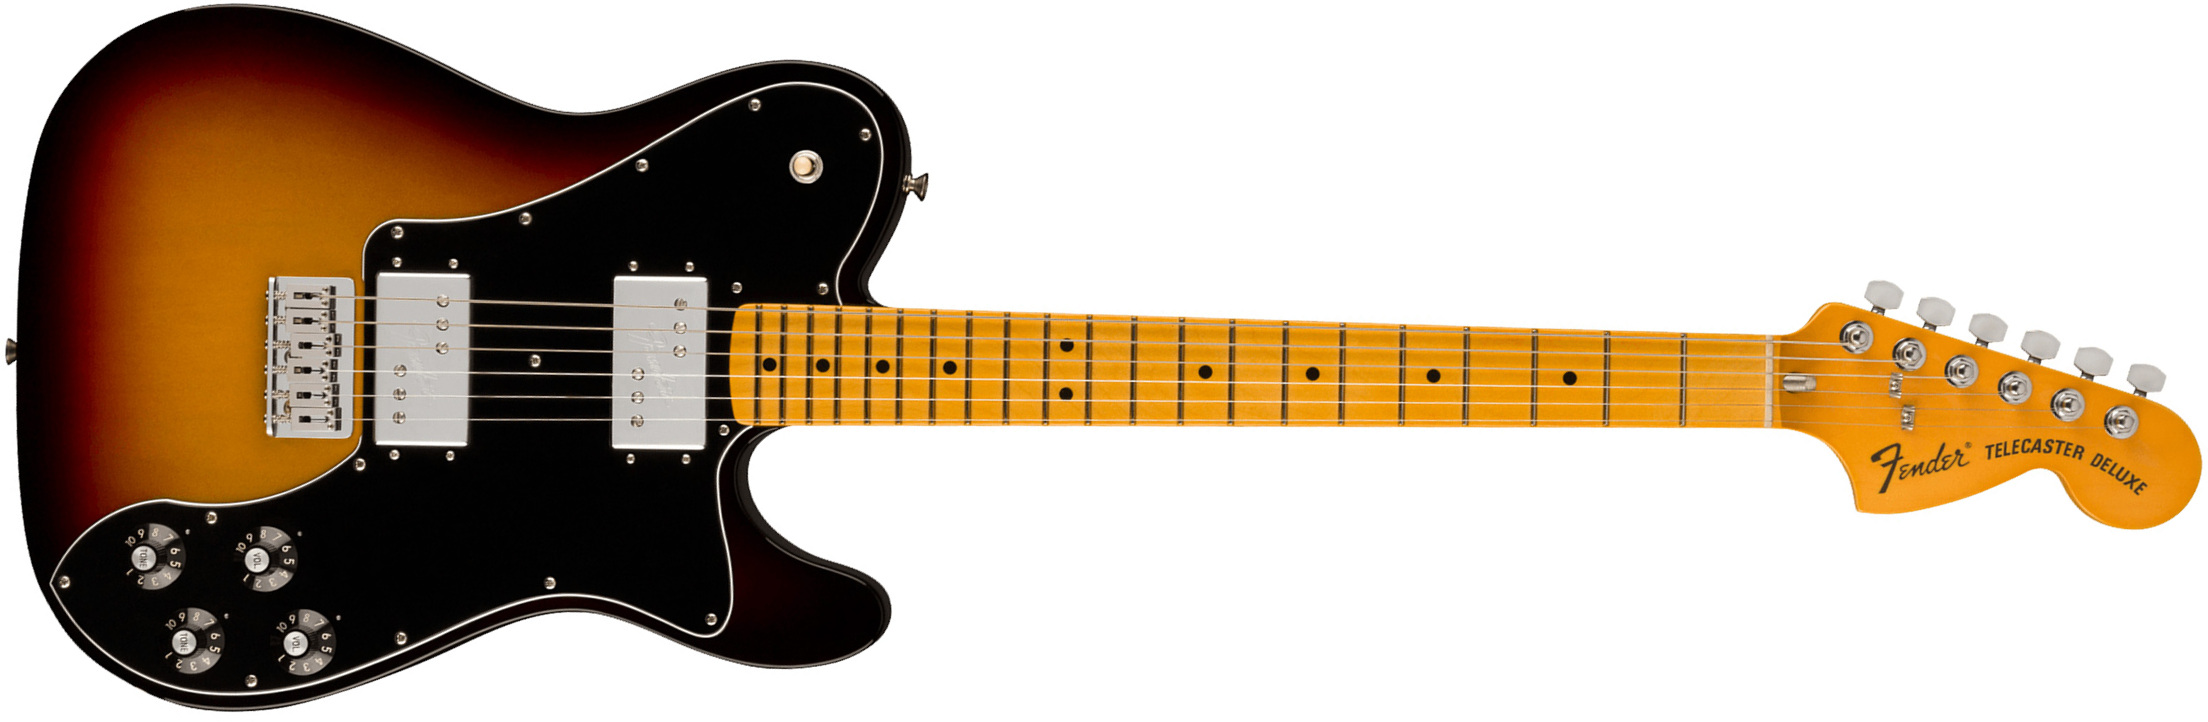 Fender Tele Deluxe 1975 American Vintage Ii Usa 2h Ht Mn - 3-color Sunburst - Guitarra eléctrica con forma de tel - Main picture